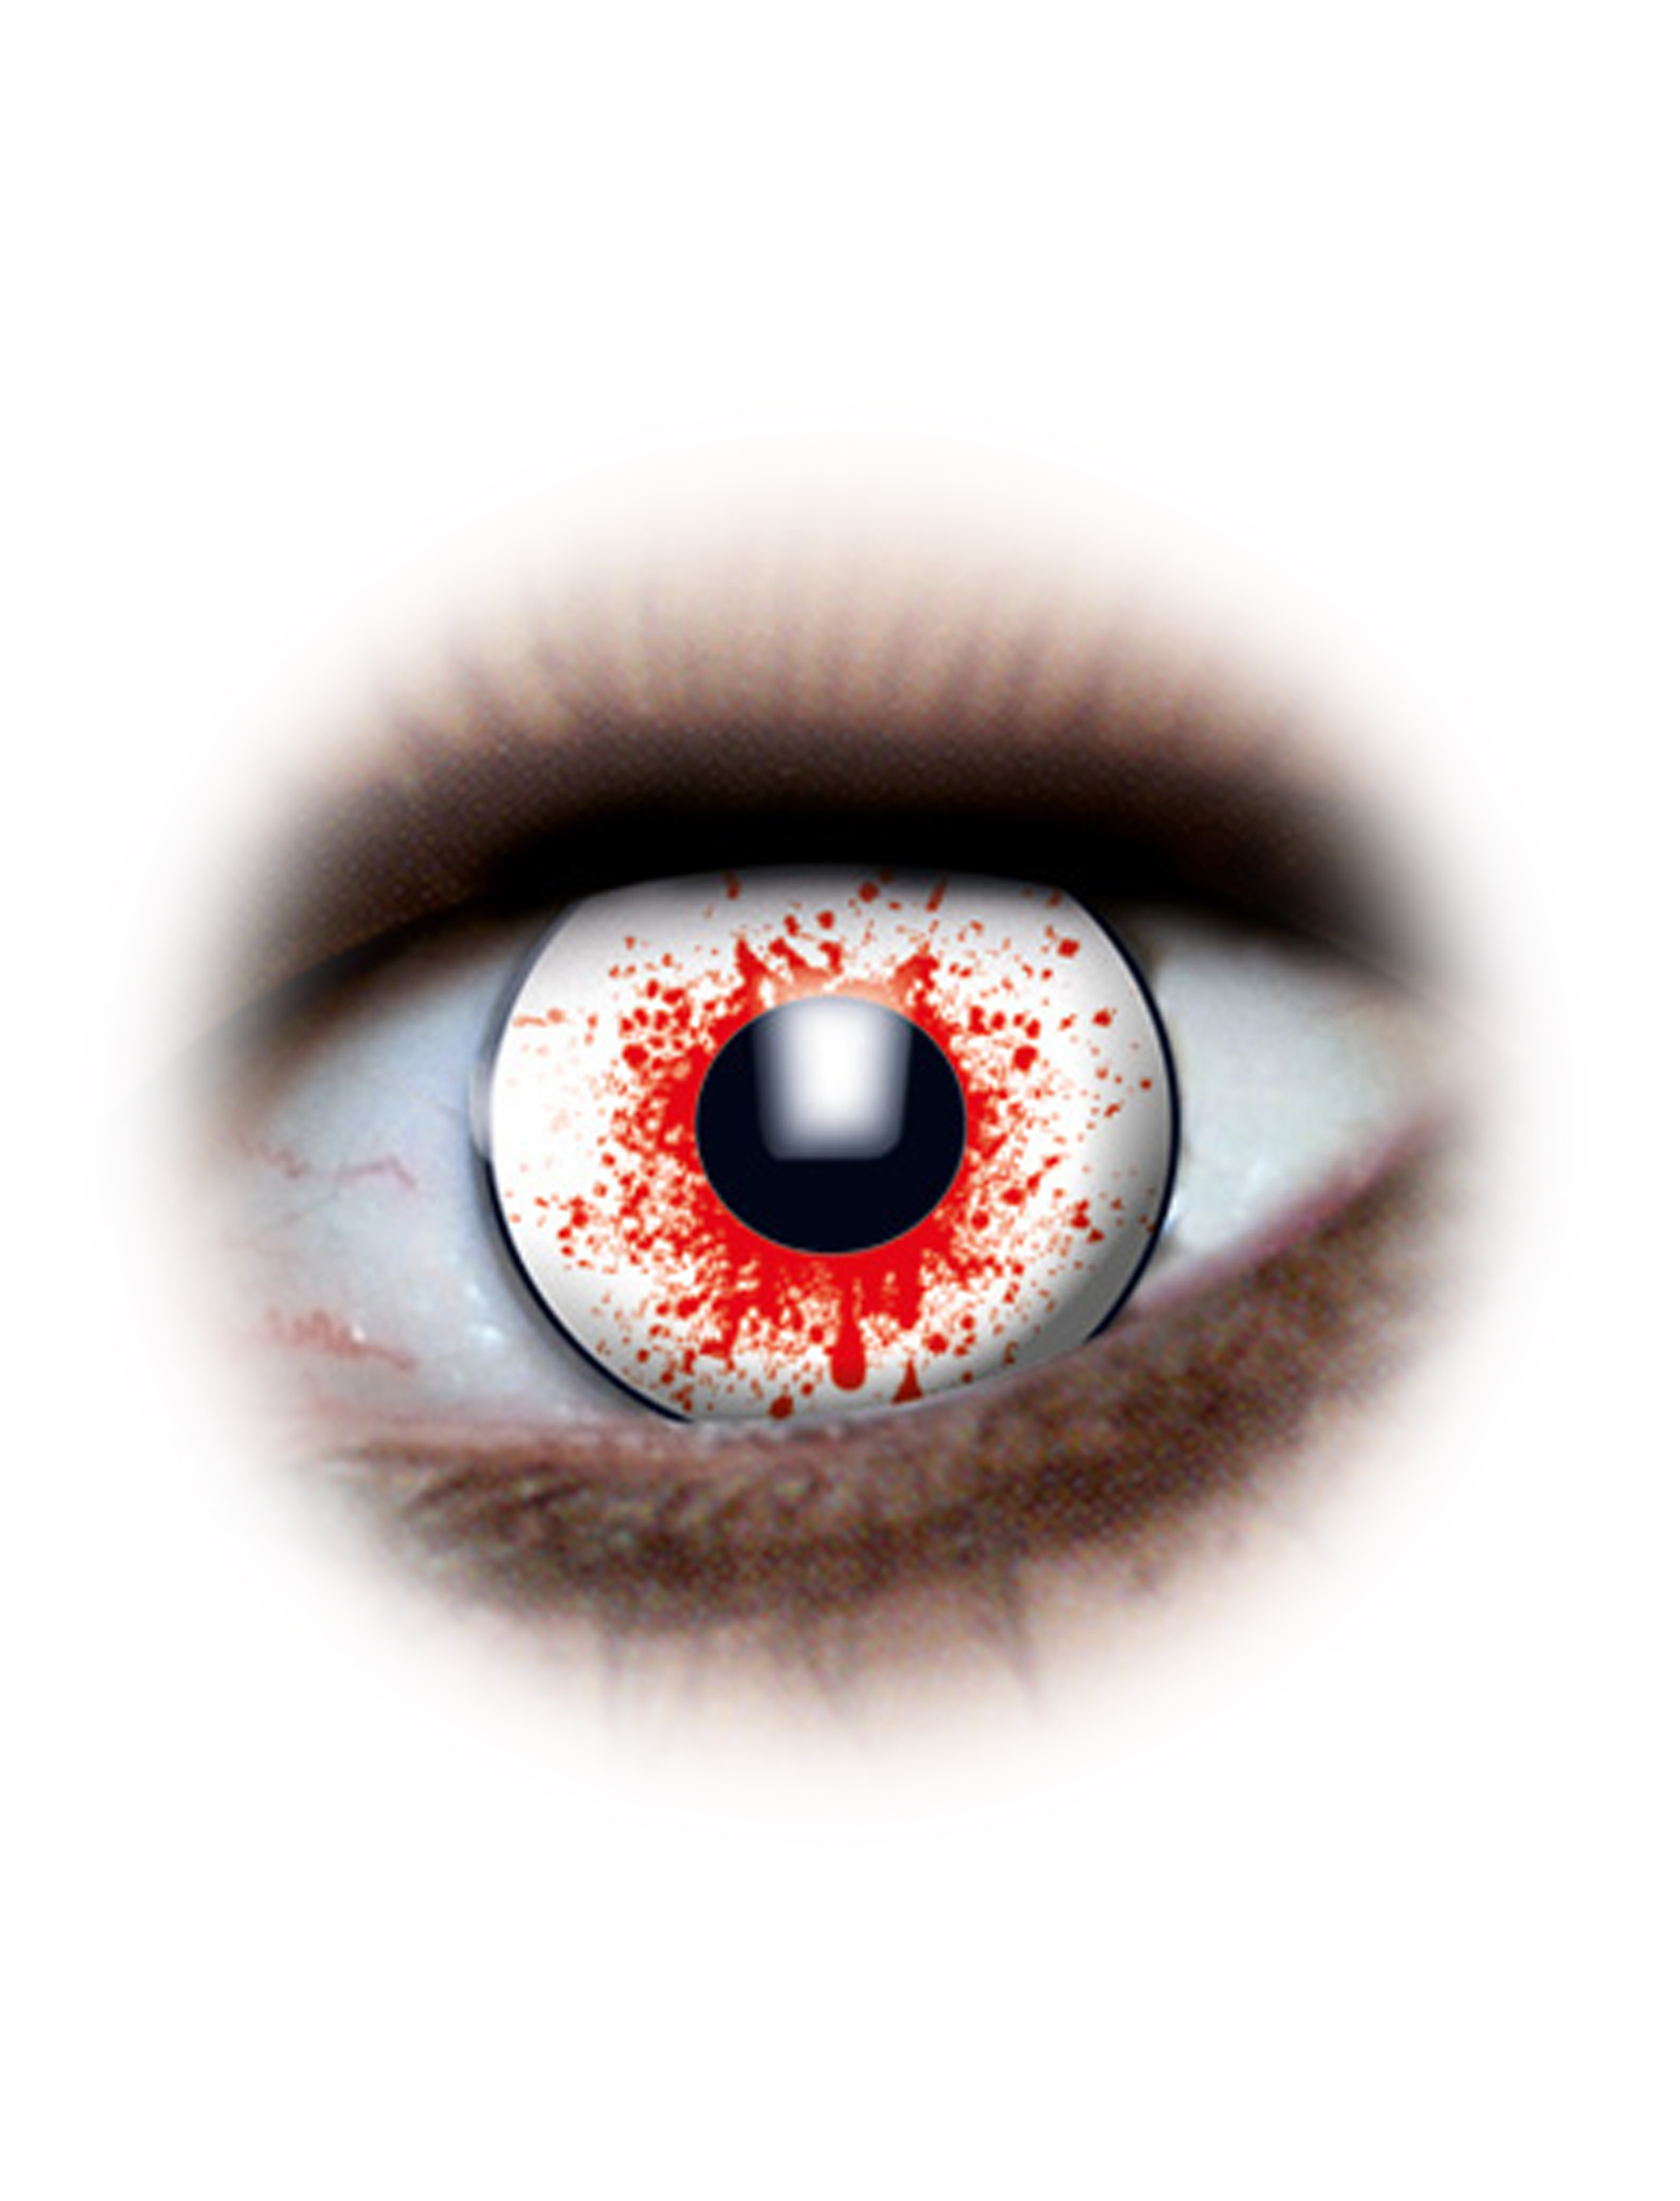 Kontaktlinse Bloodsplat rot/weiß -1.5 Dioptrien